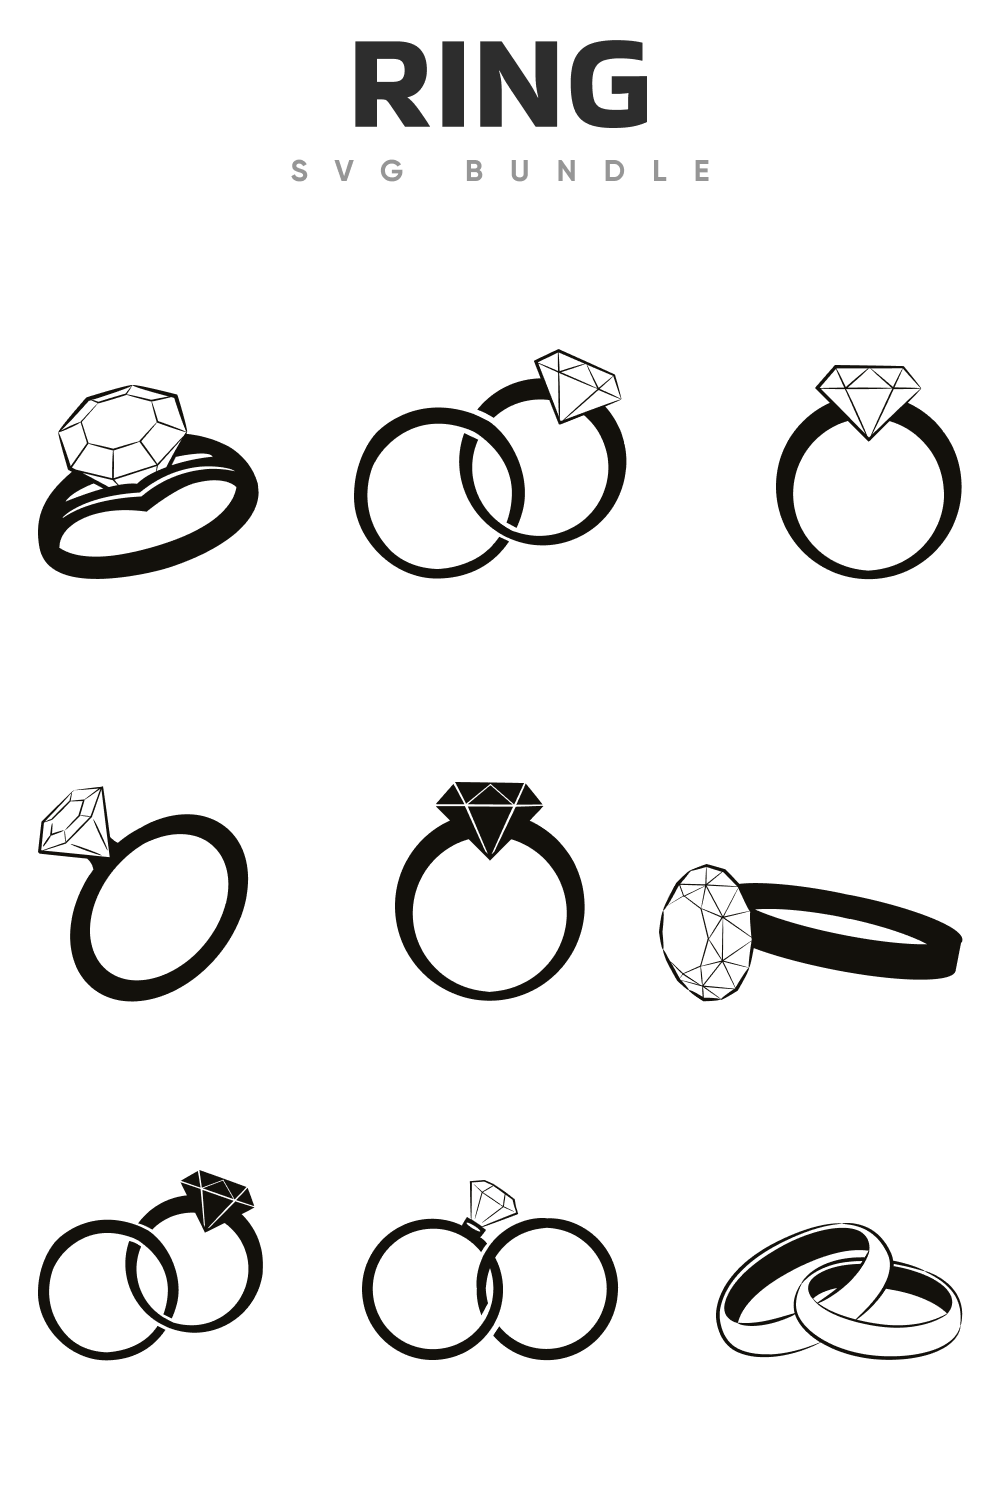 So many rings options.